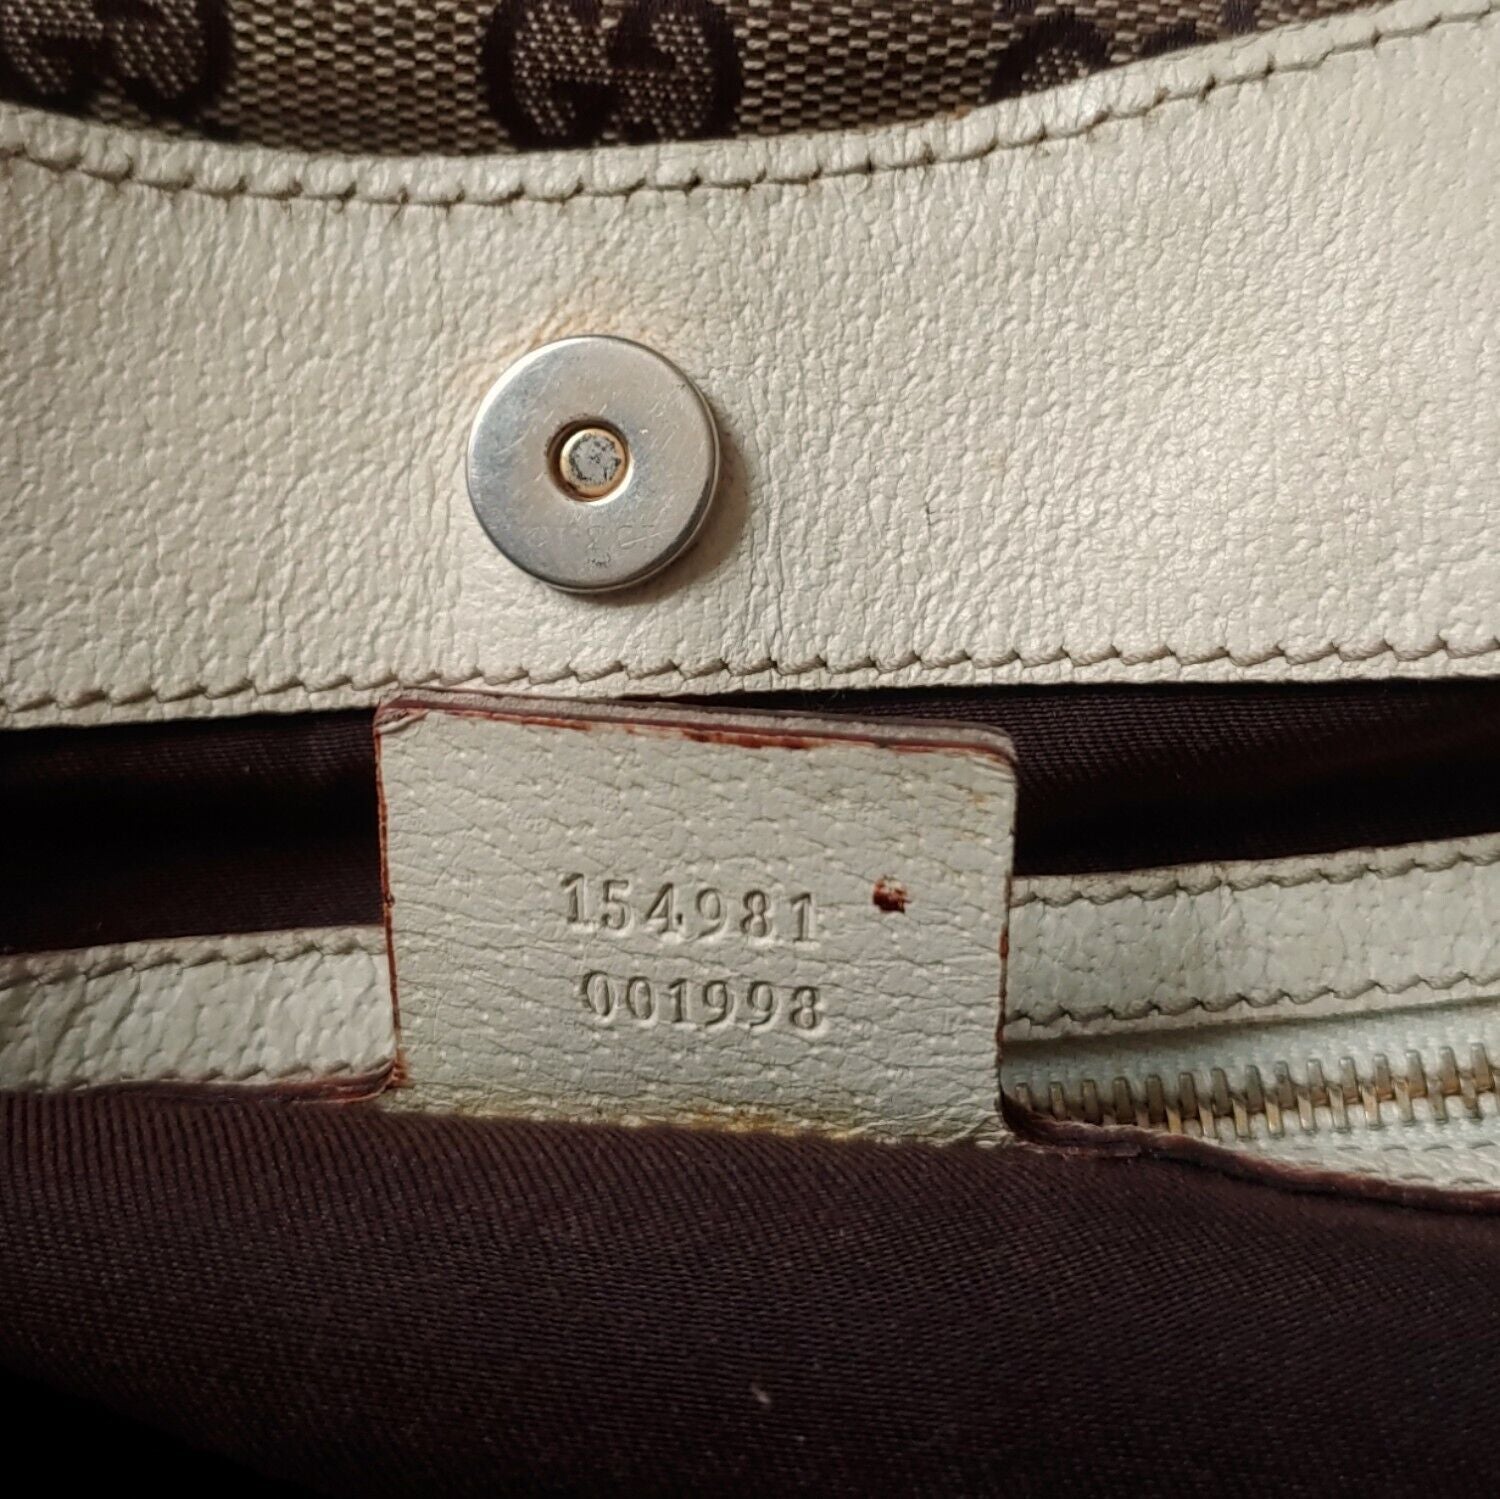 Vintage 90s Gucci GG Canvas Shoulder Handbag With Leather Handles 154981001998 Authentic Code - Casspios Dream